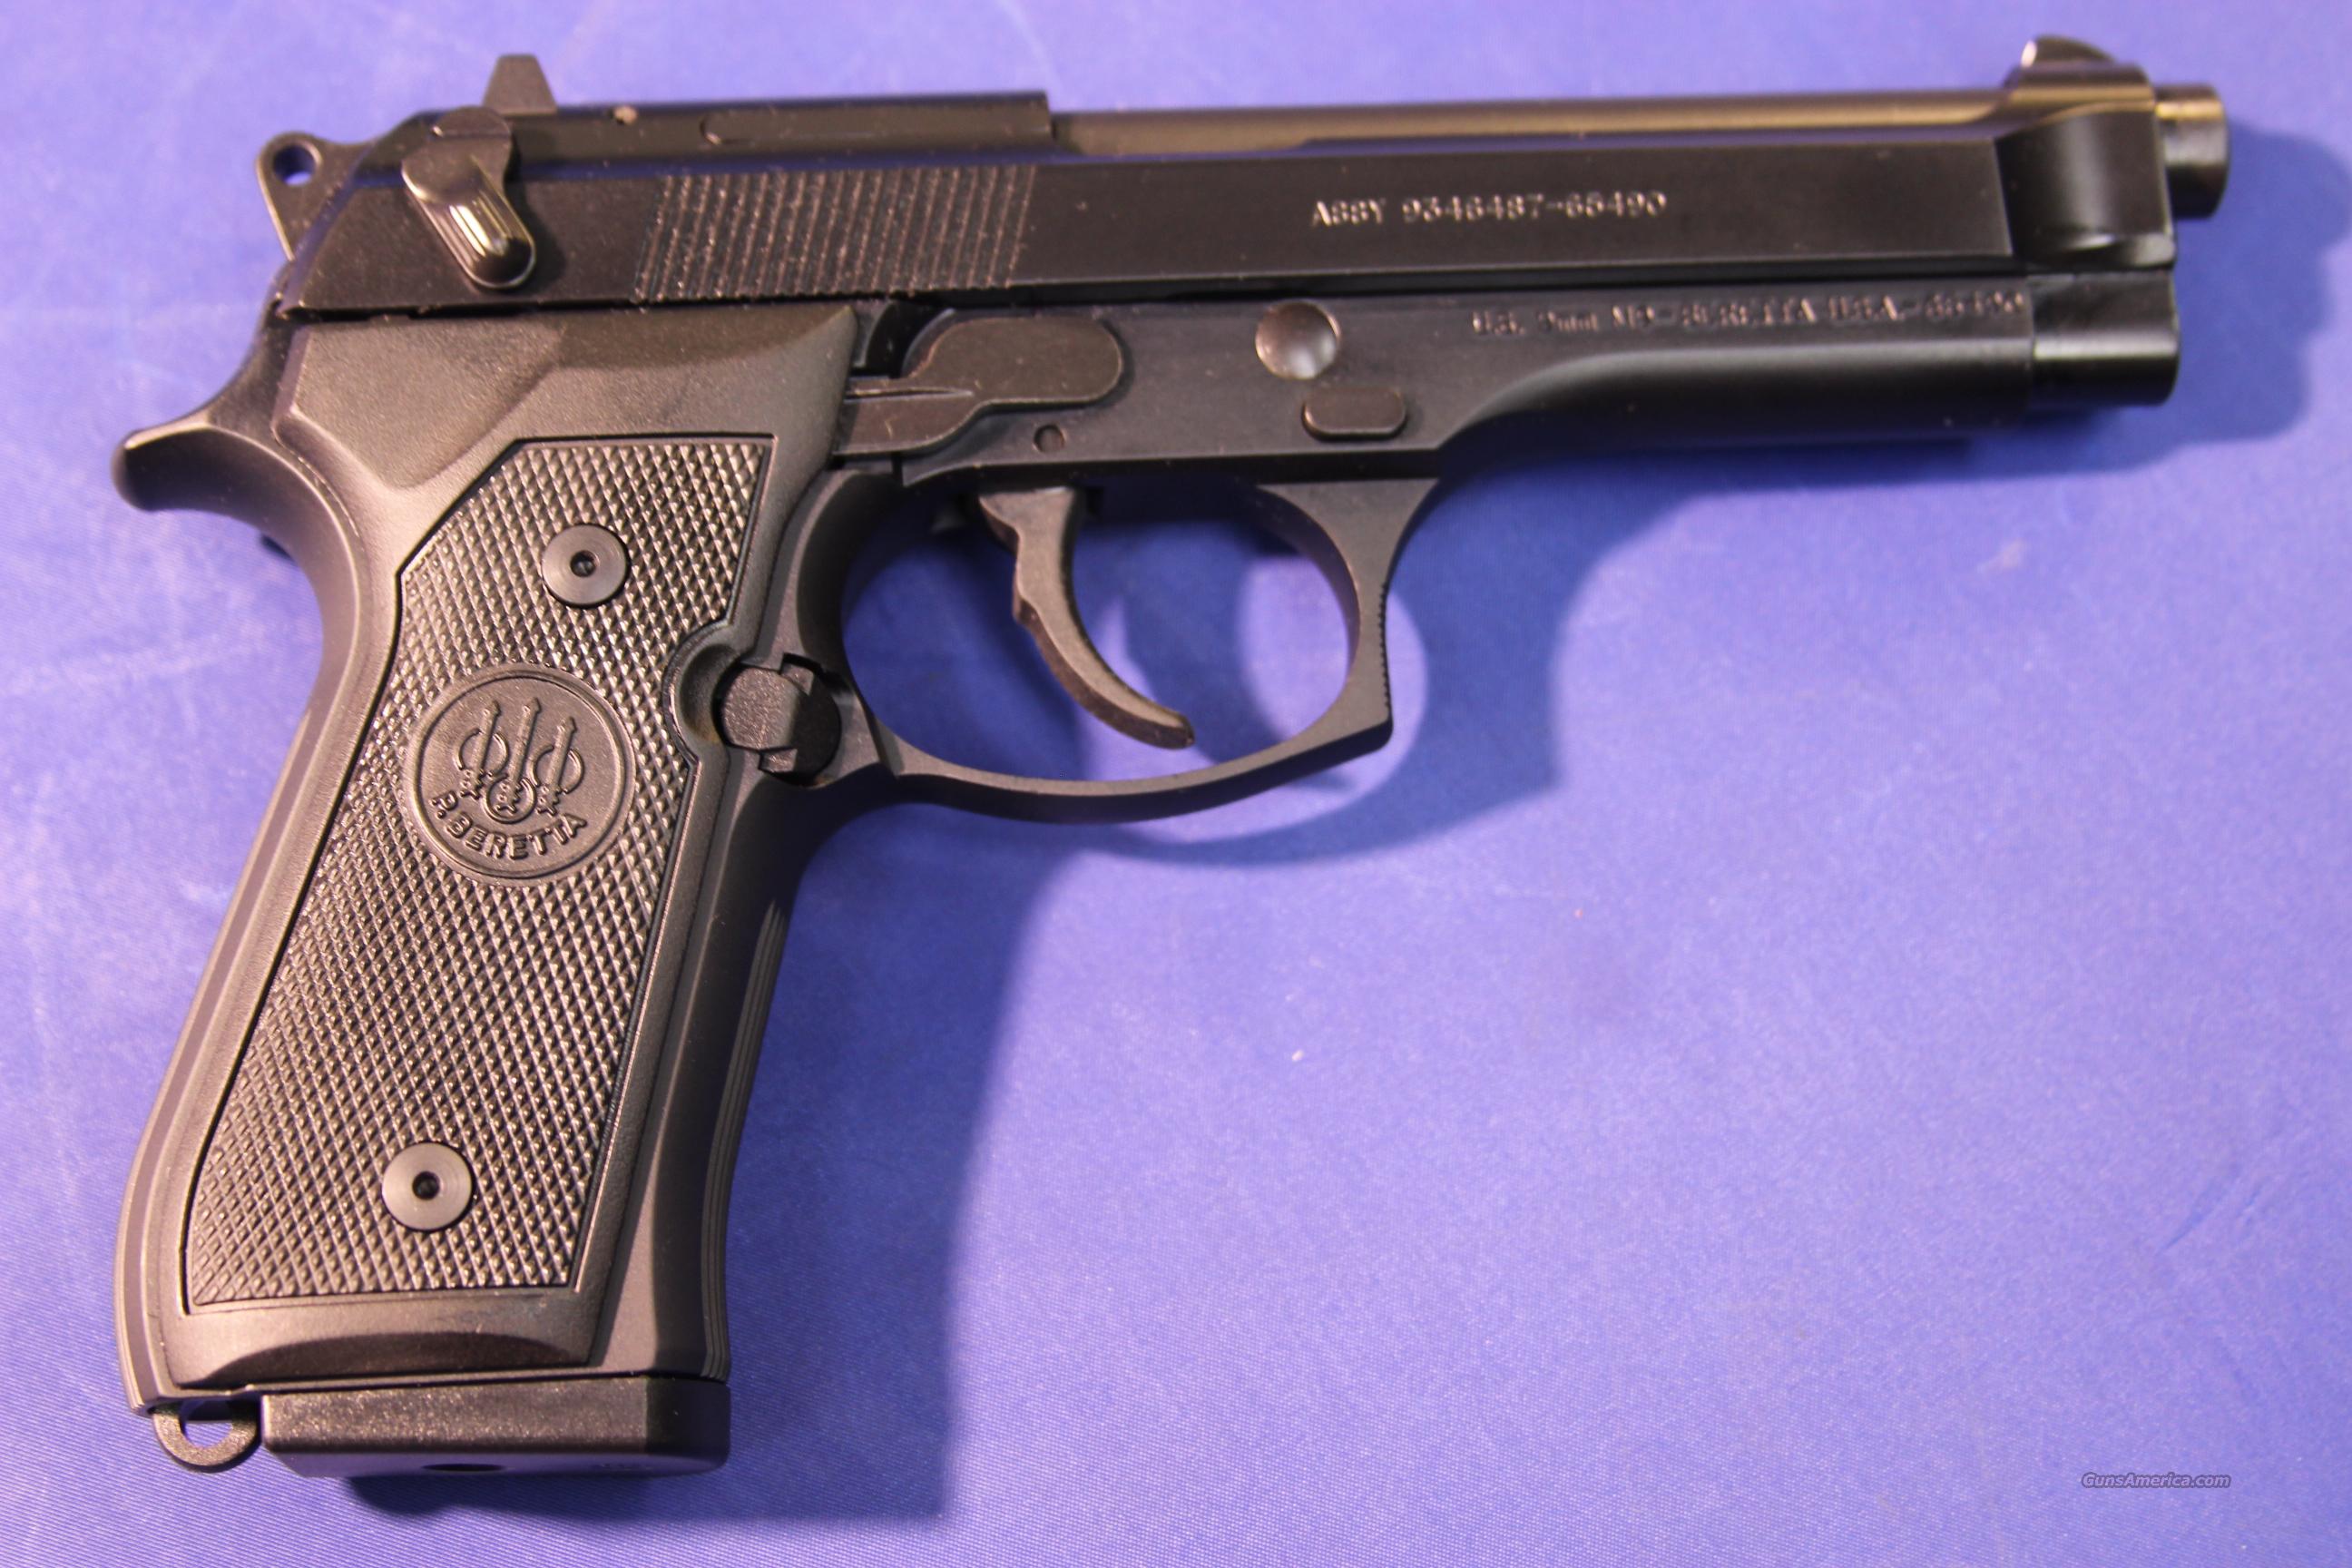 THE ON POINT RESOURCE: Beretta M9 Pistol, 9x19mm NATO